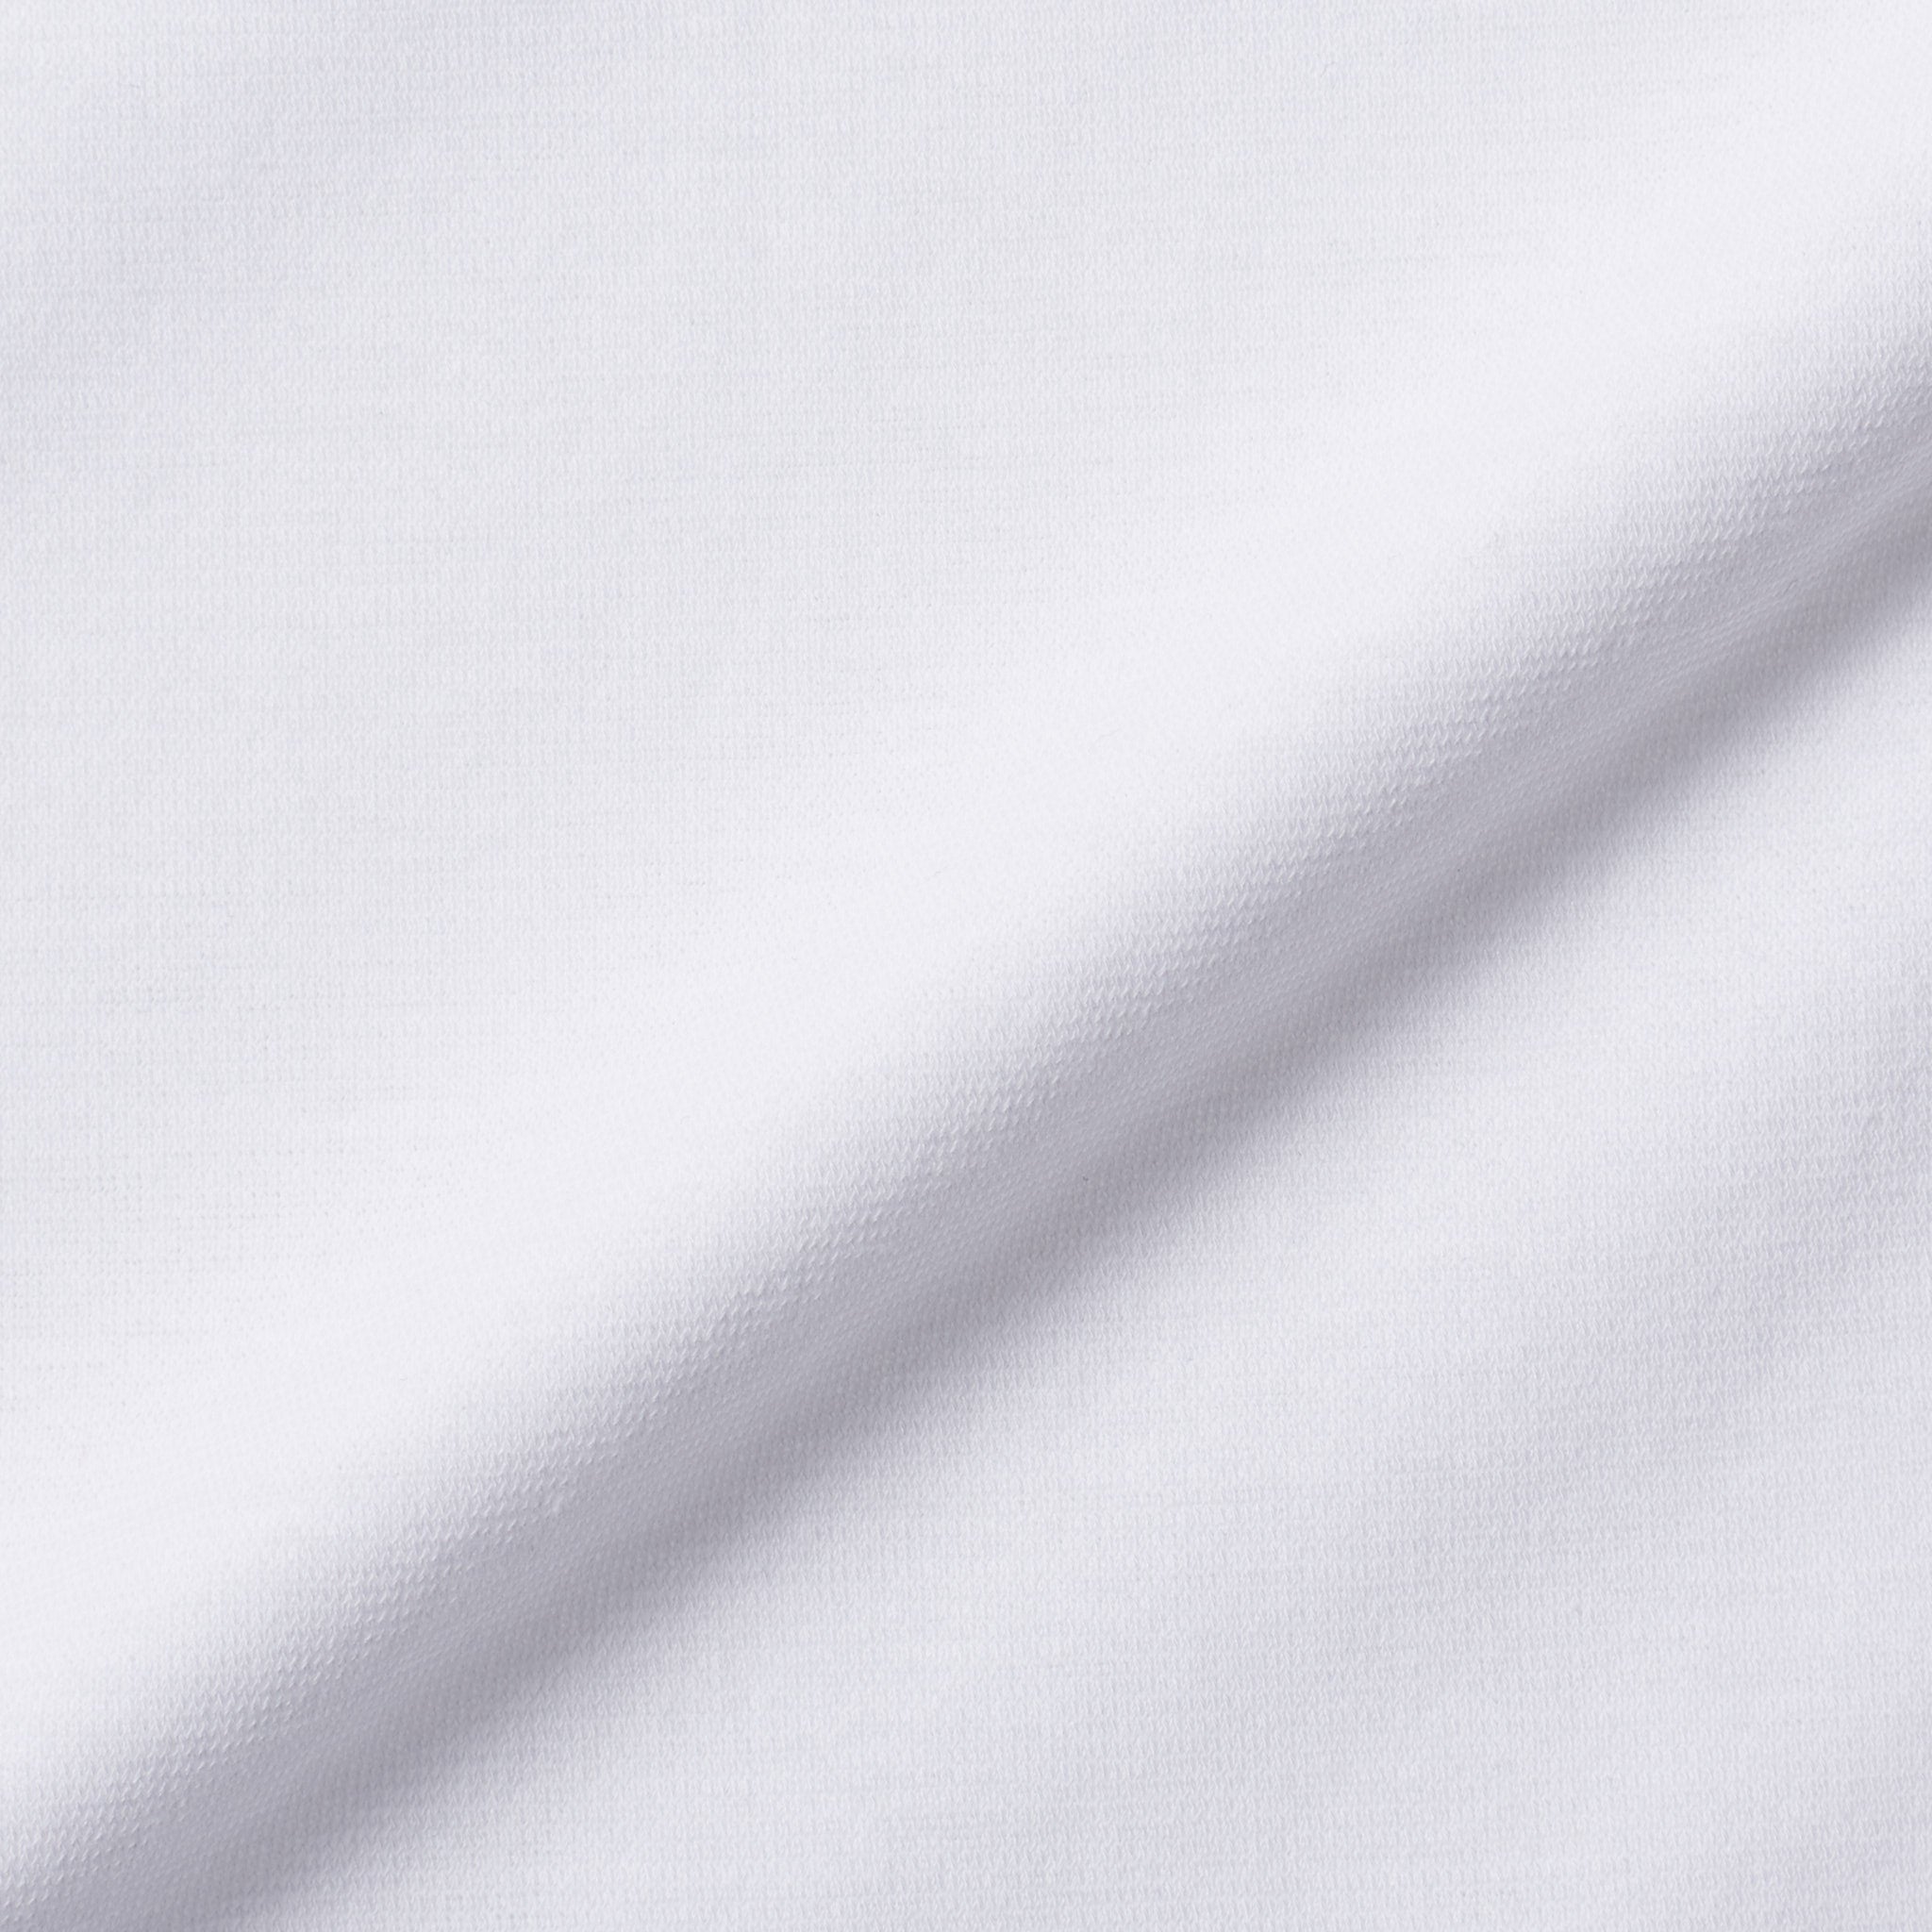 Kiton KIRED "Bacio" White Exclusive Crepe Cotton Short Sleeve T-Shirt Slim KIRED